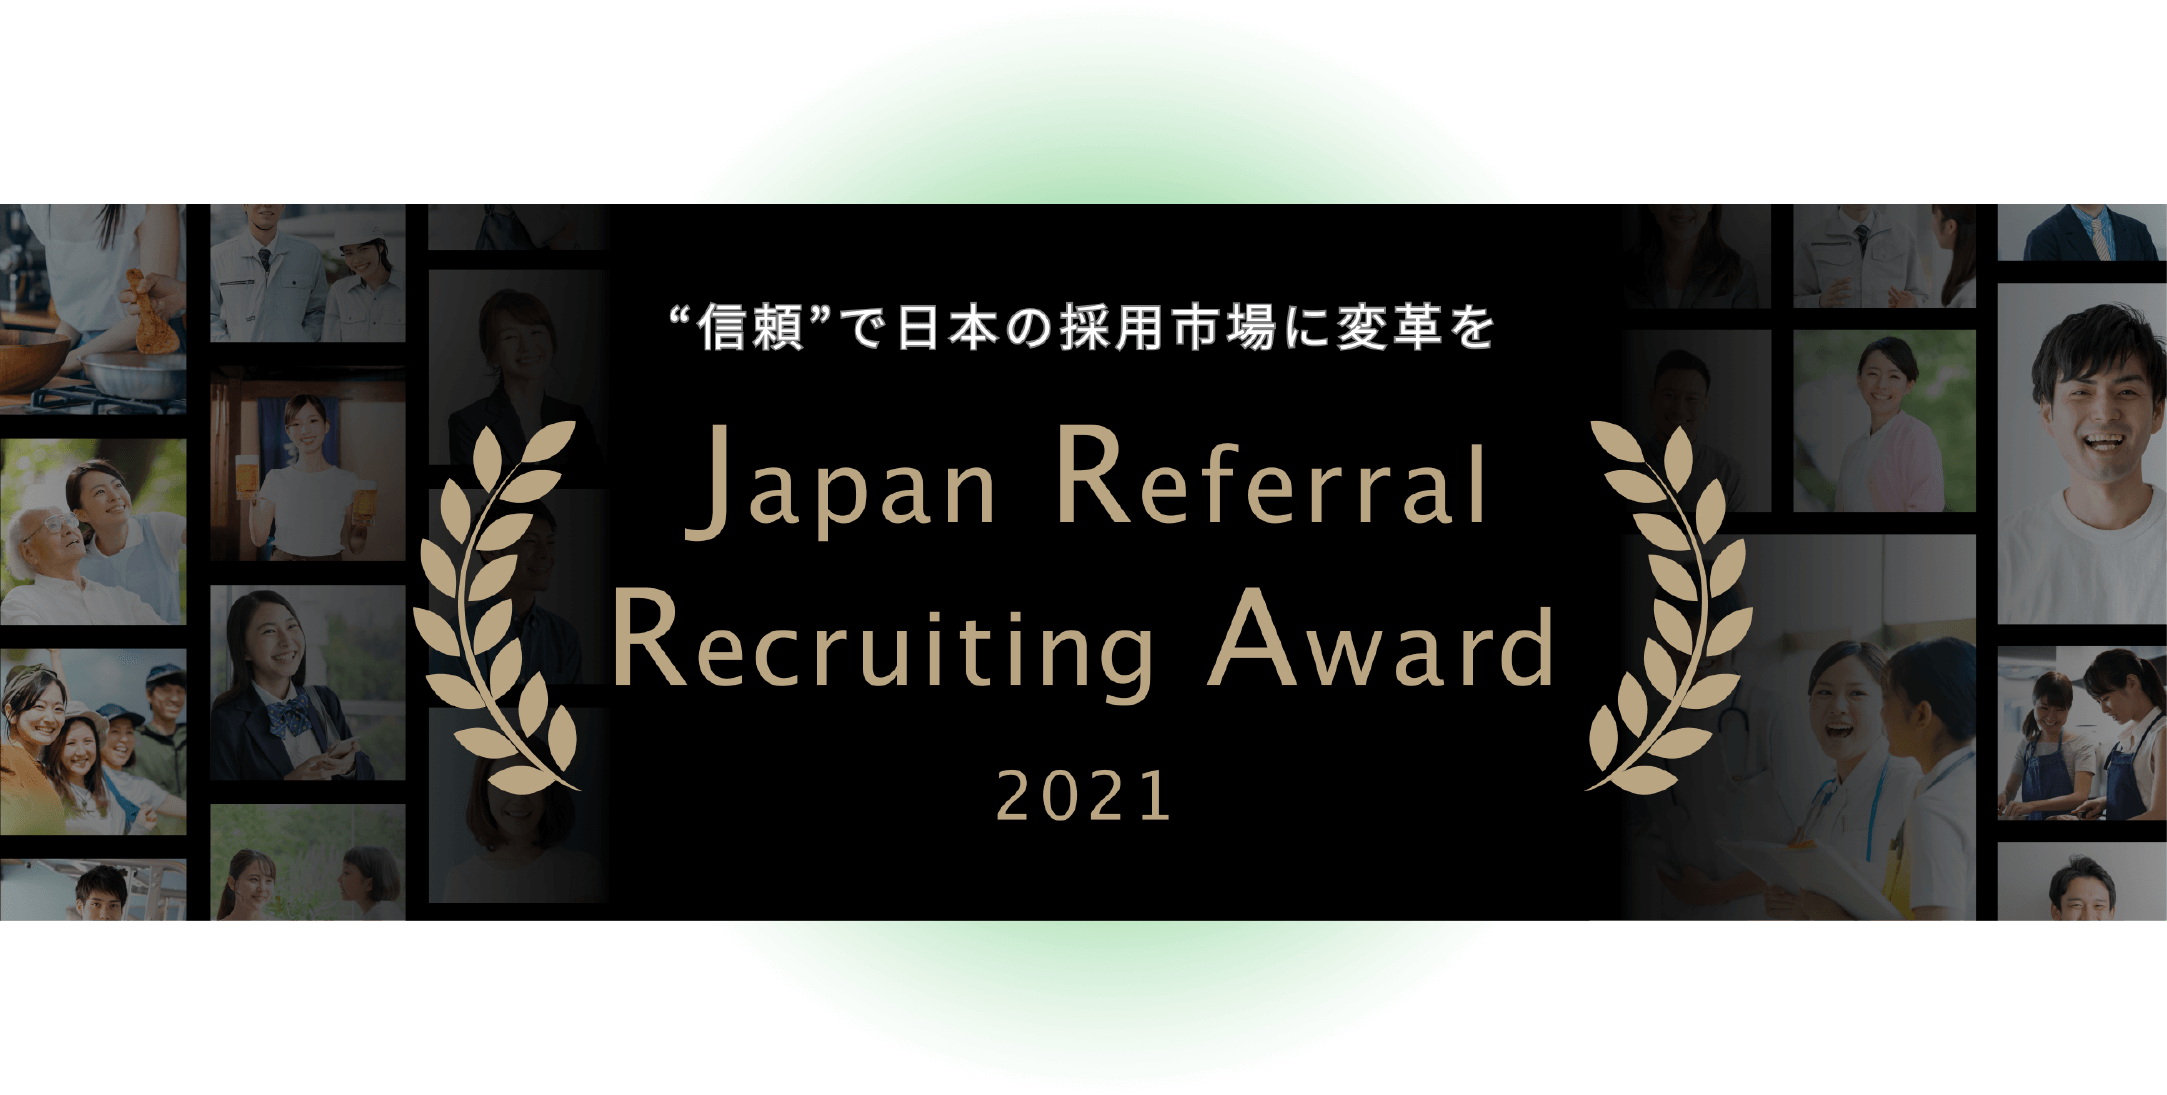 Japan Referral Recruiting Award